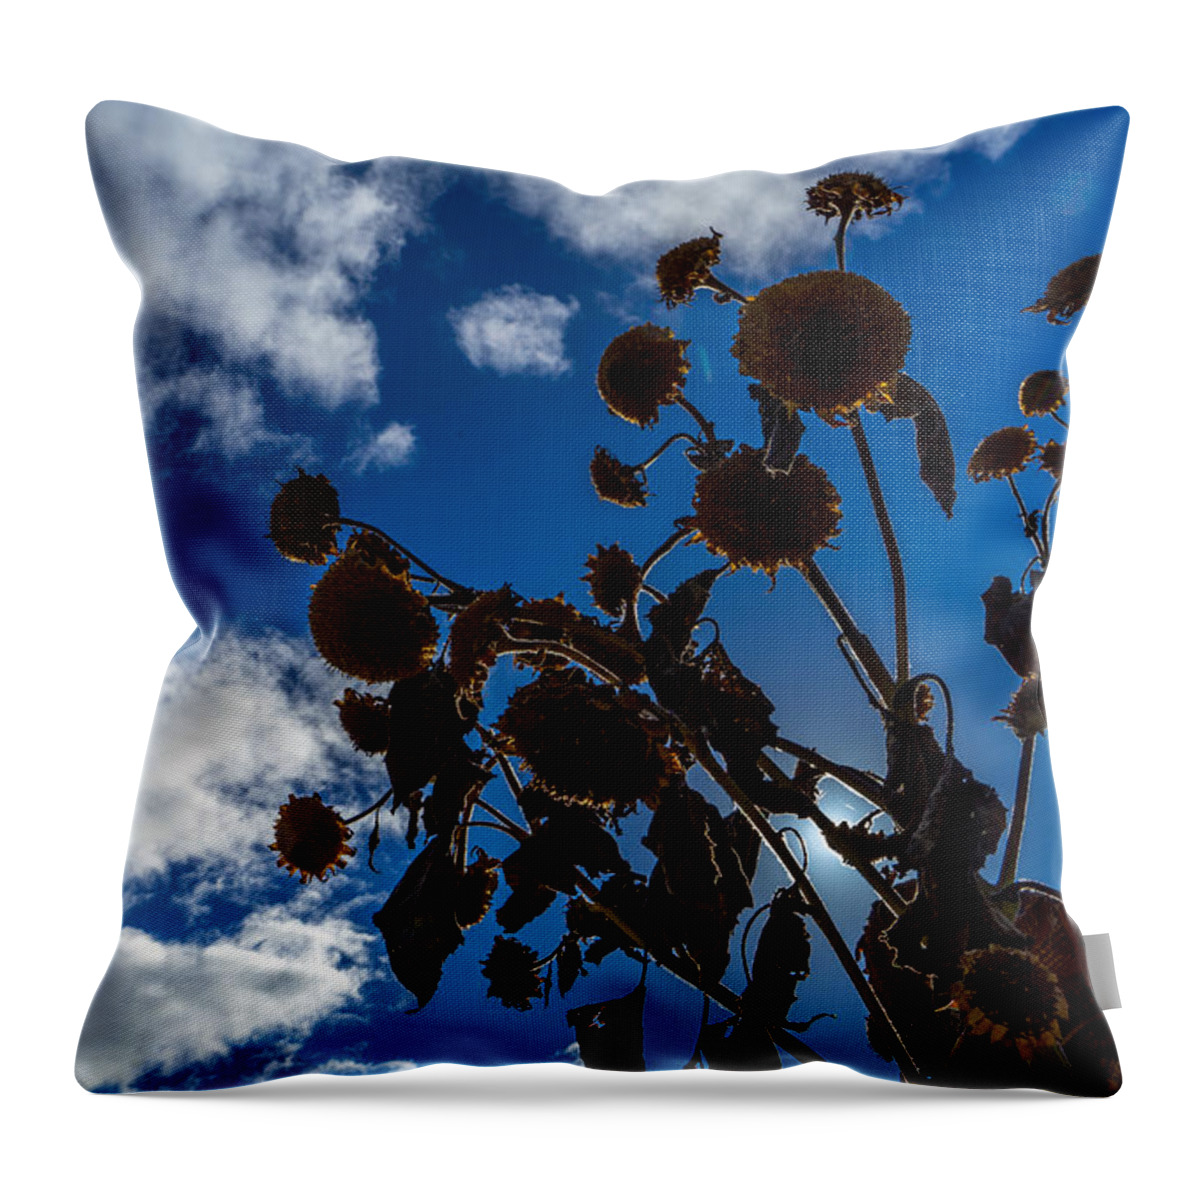 Sunset Throw Pillow featuring the photograph Darkening Skies by Derek Dean